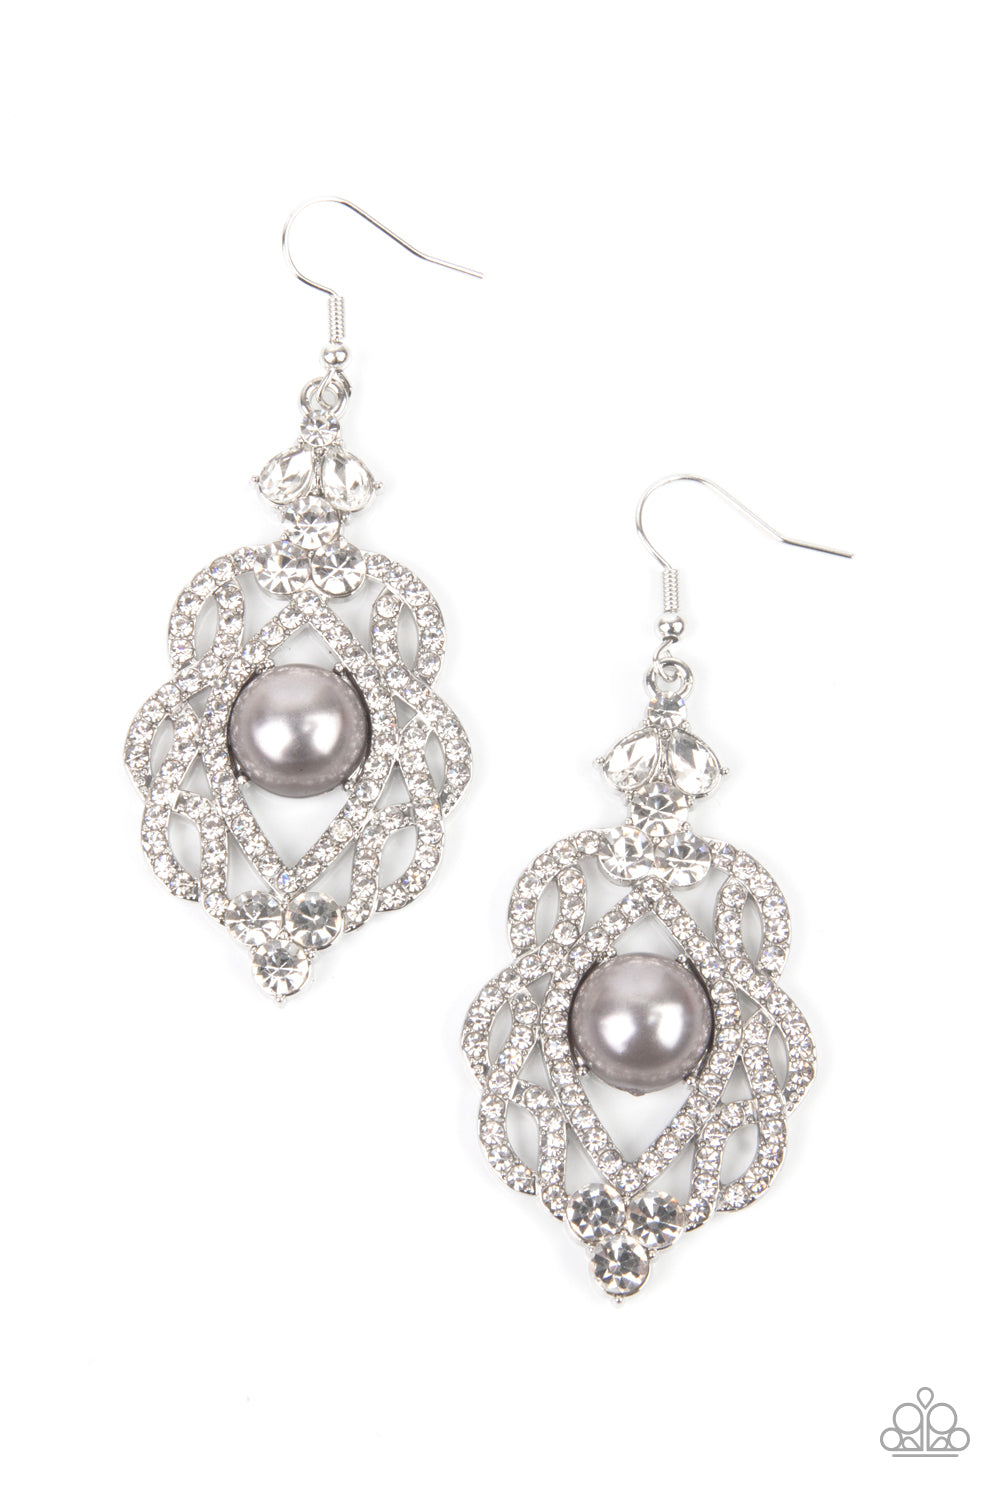 Rustic Silver Pearl Drop Earrings | Breathe Autumn Rain Jewelry